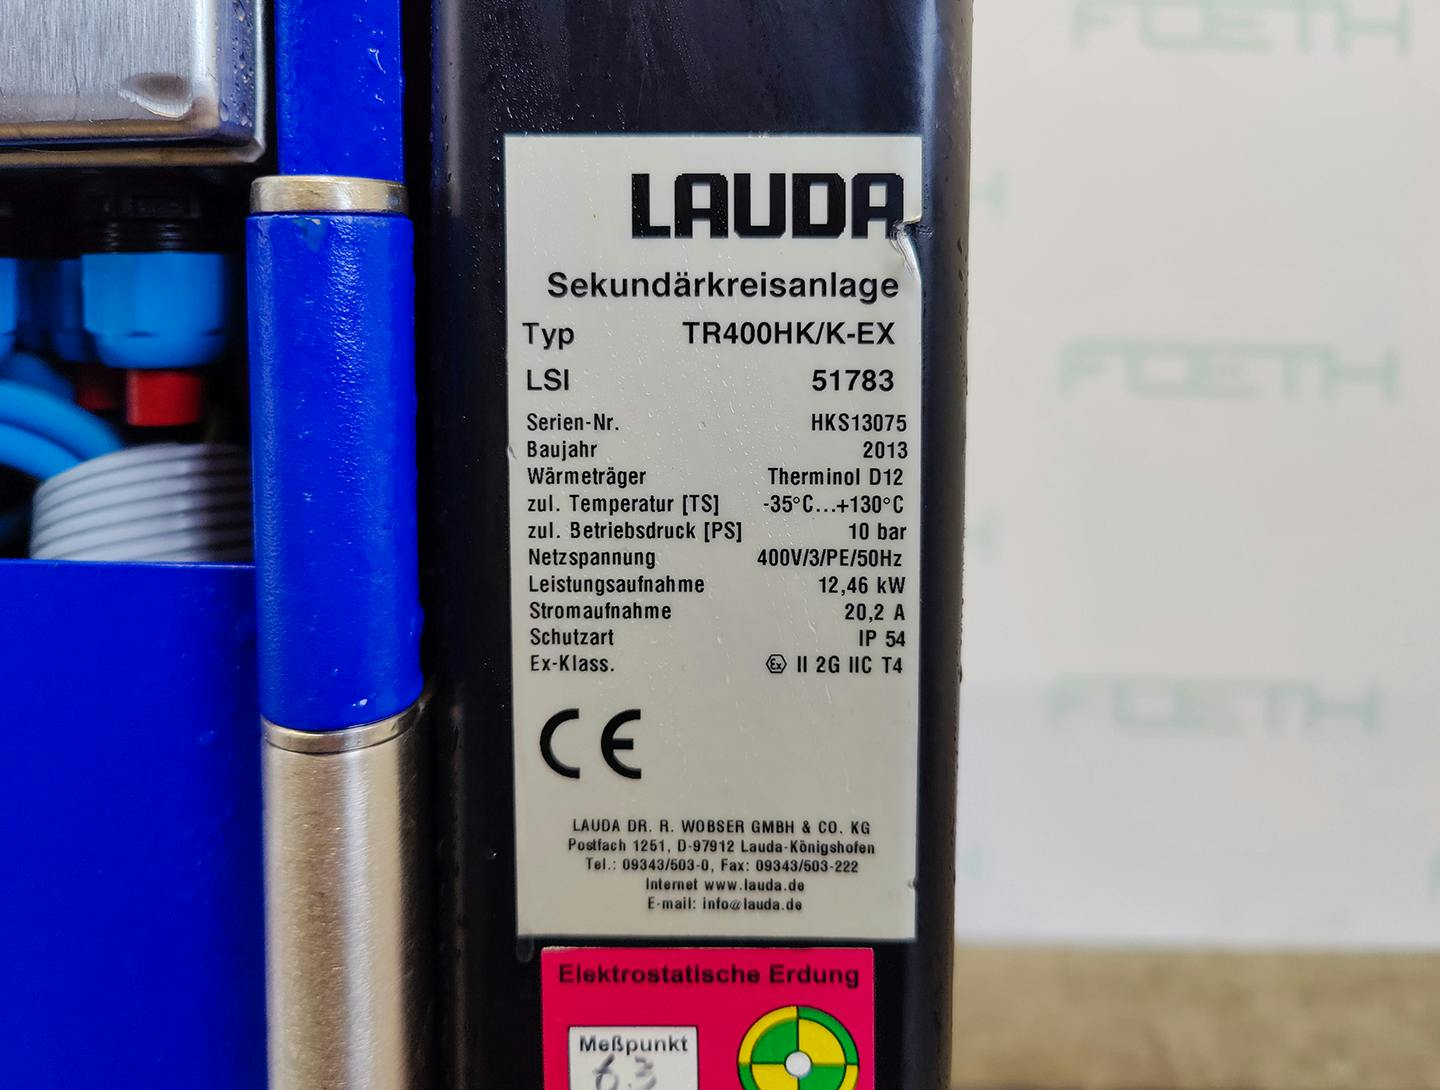 Lauda TR400 HK/K-EX "secondary circuit system" - Chladic recirkulacní - image 6